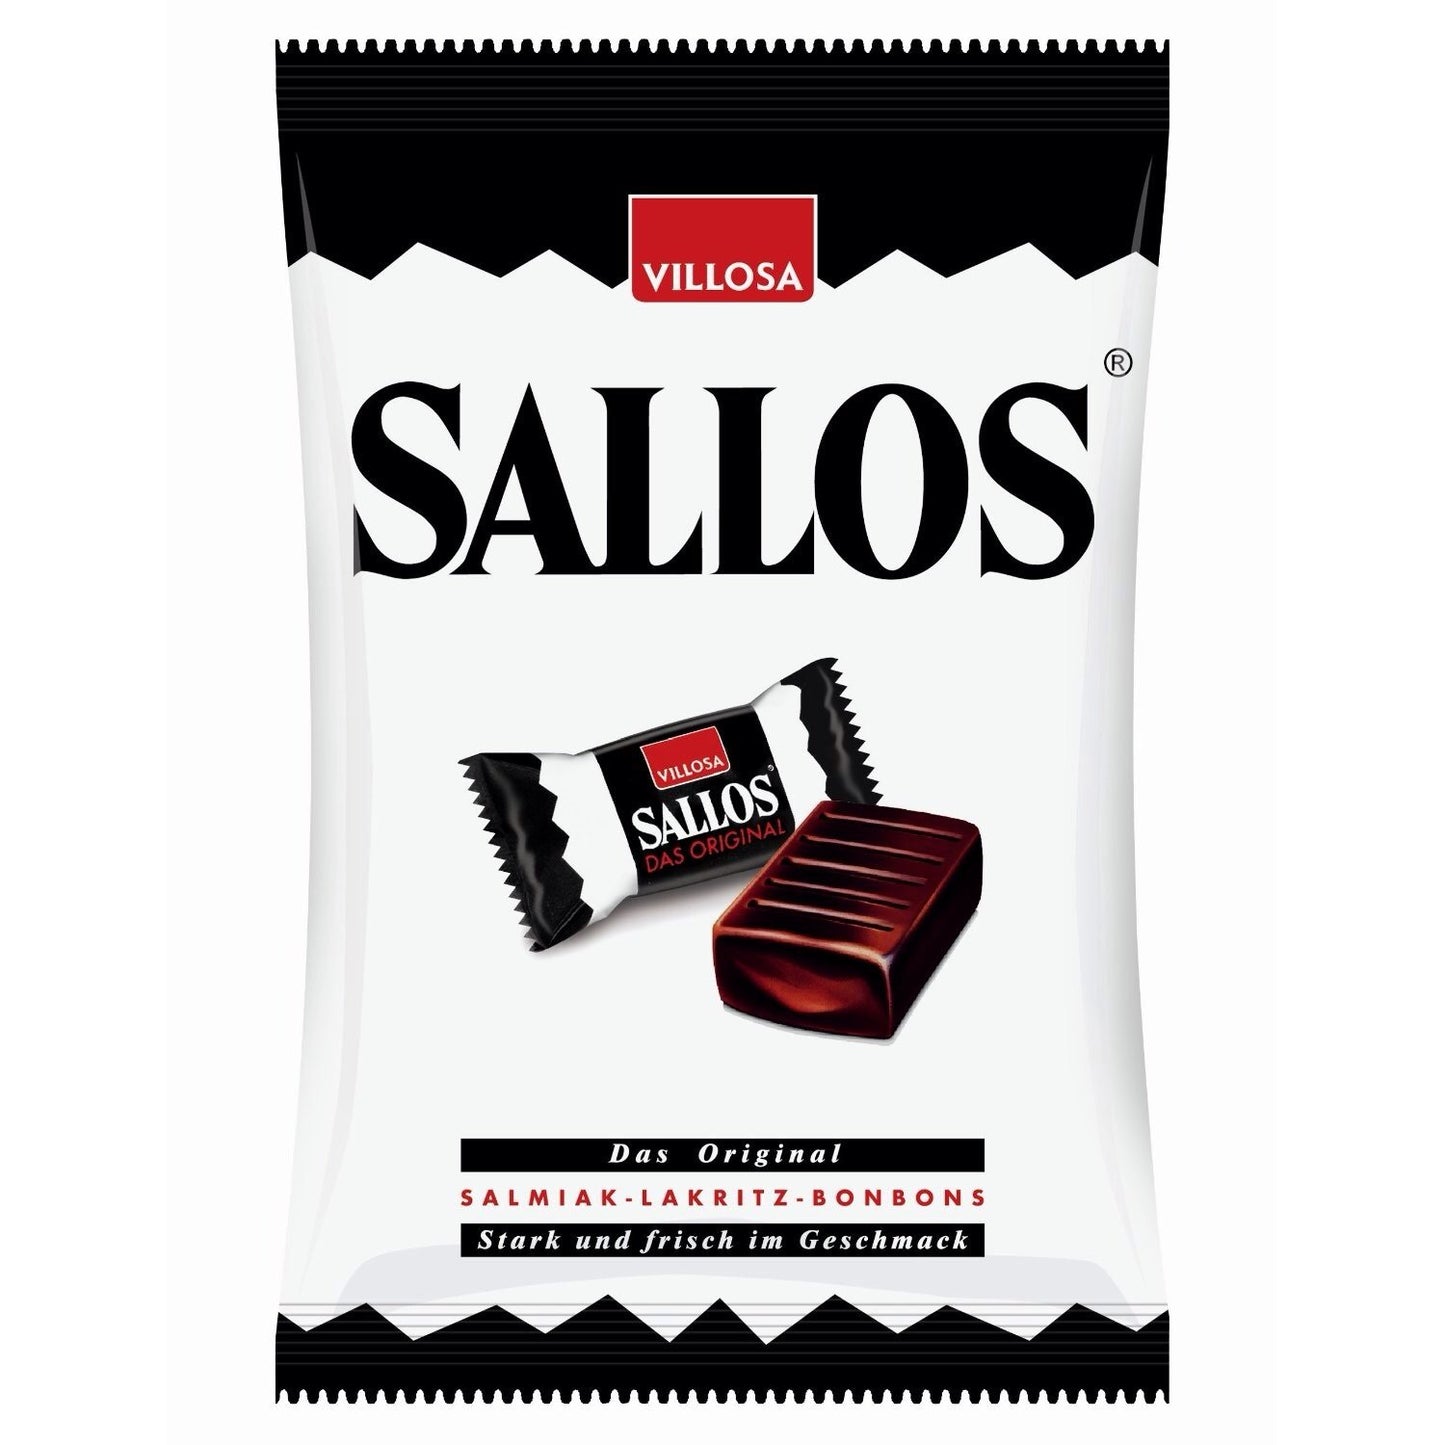 Sallos - Original